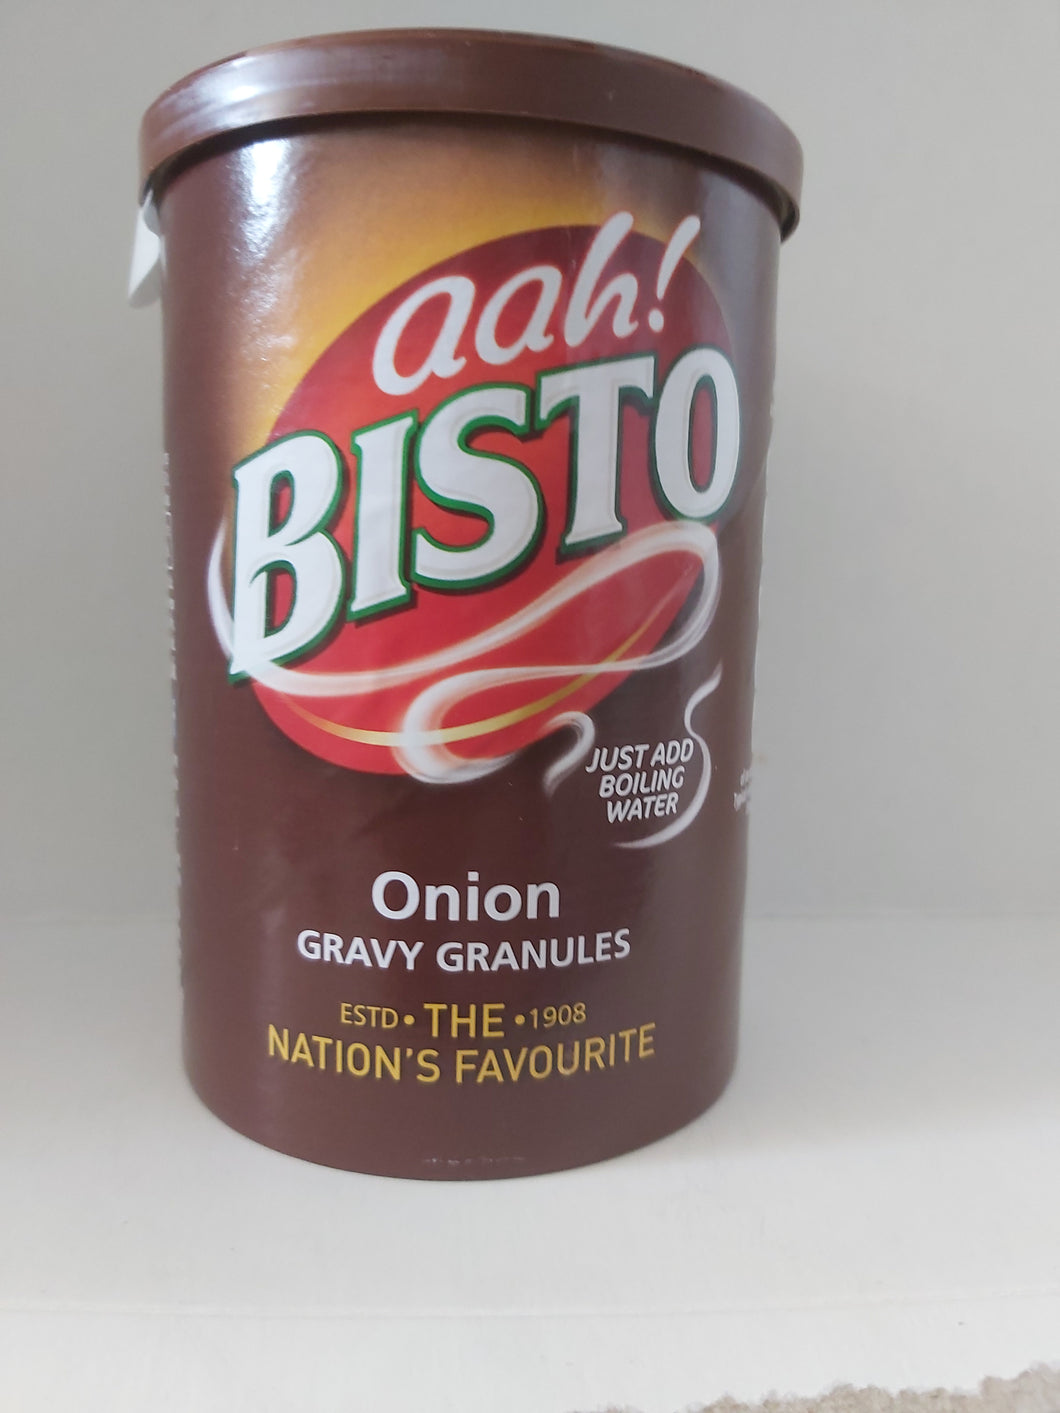 Bisto Onion Gravy Granules 170g